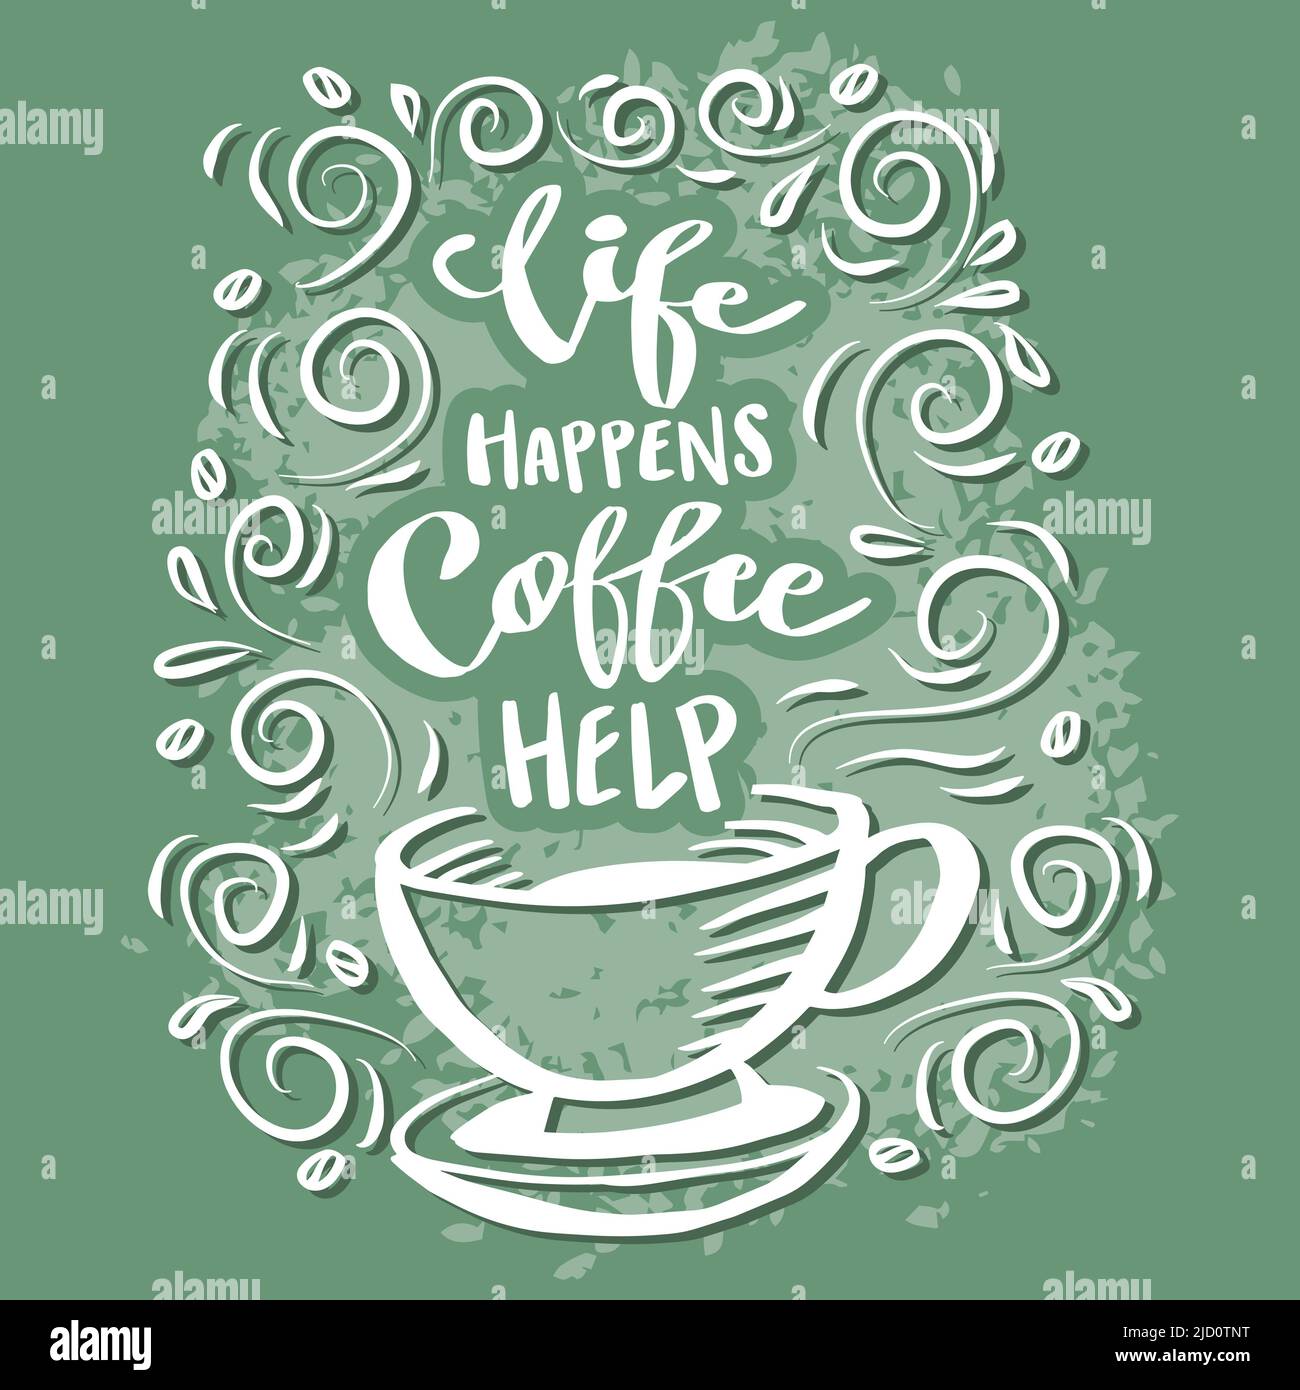 Life happens coffee help. Poster quotes. Stock Photo